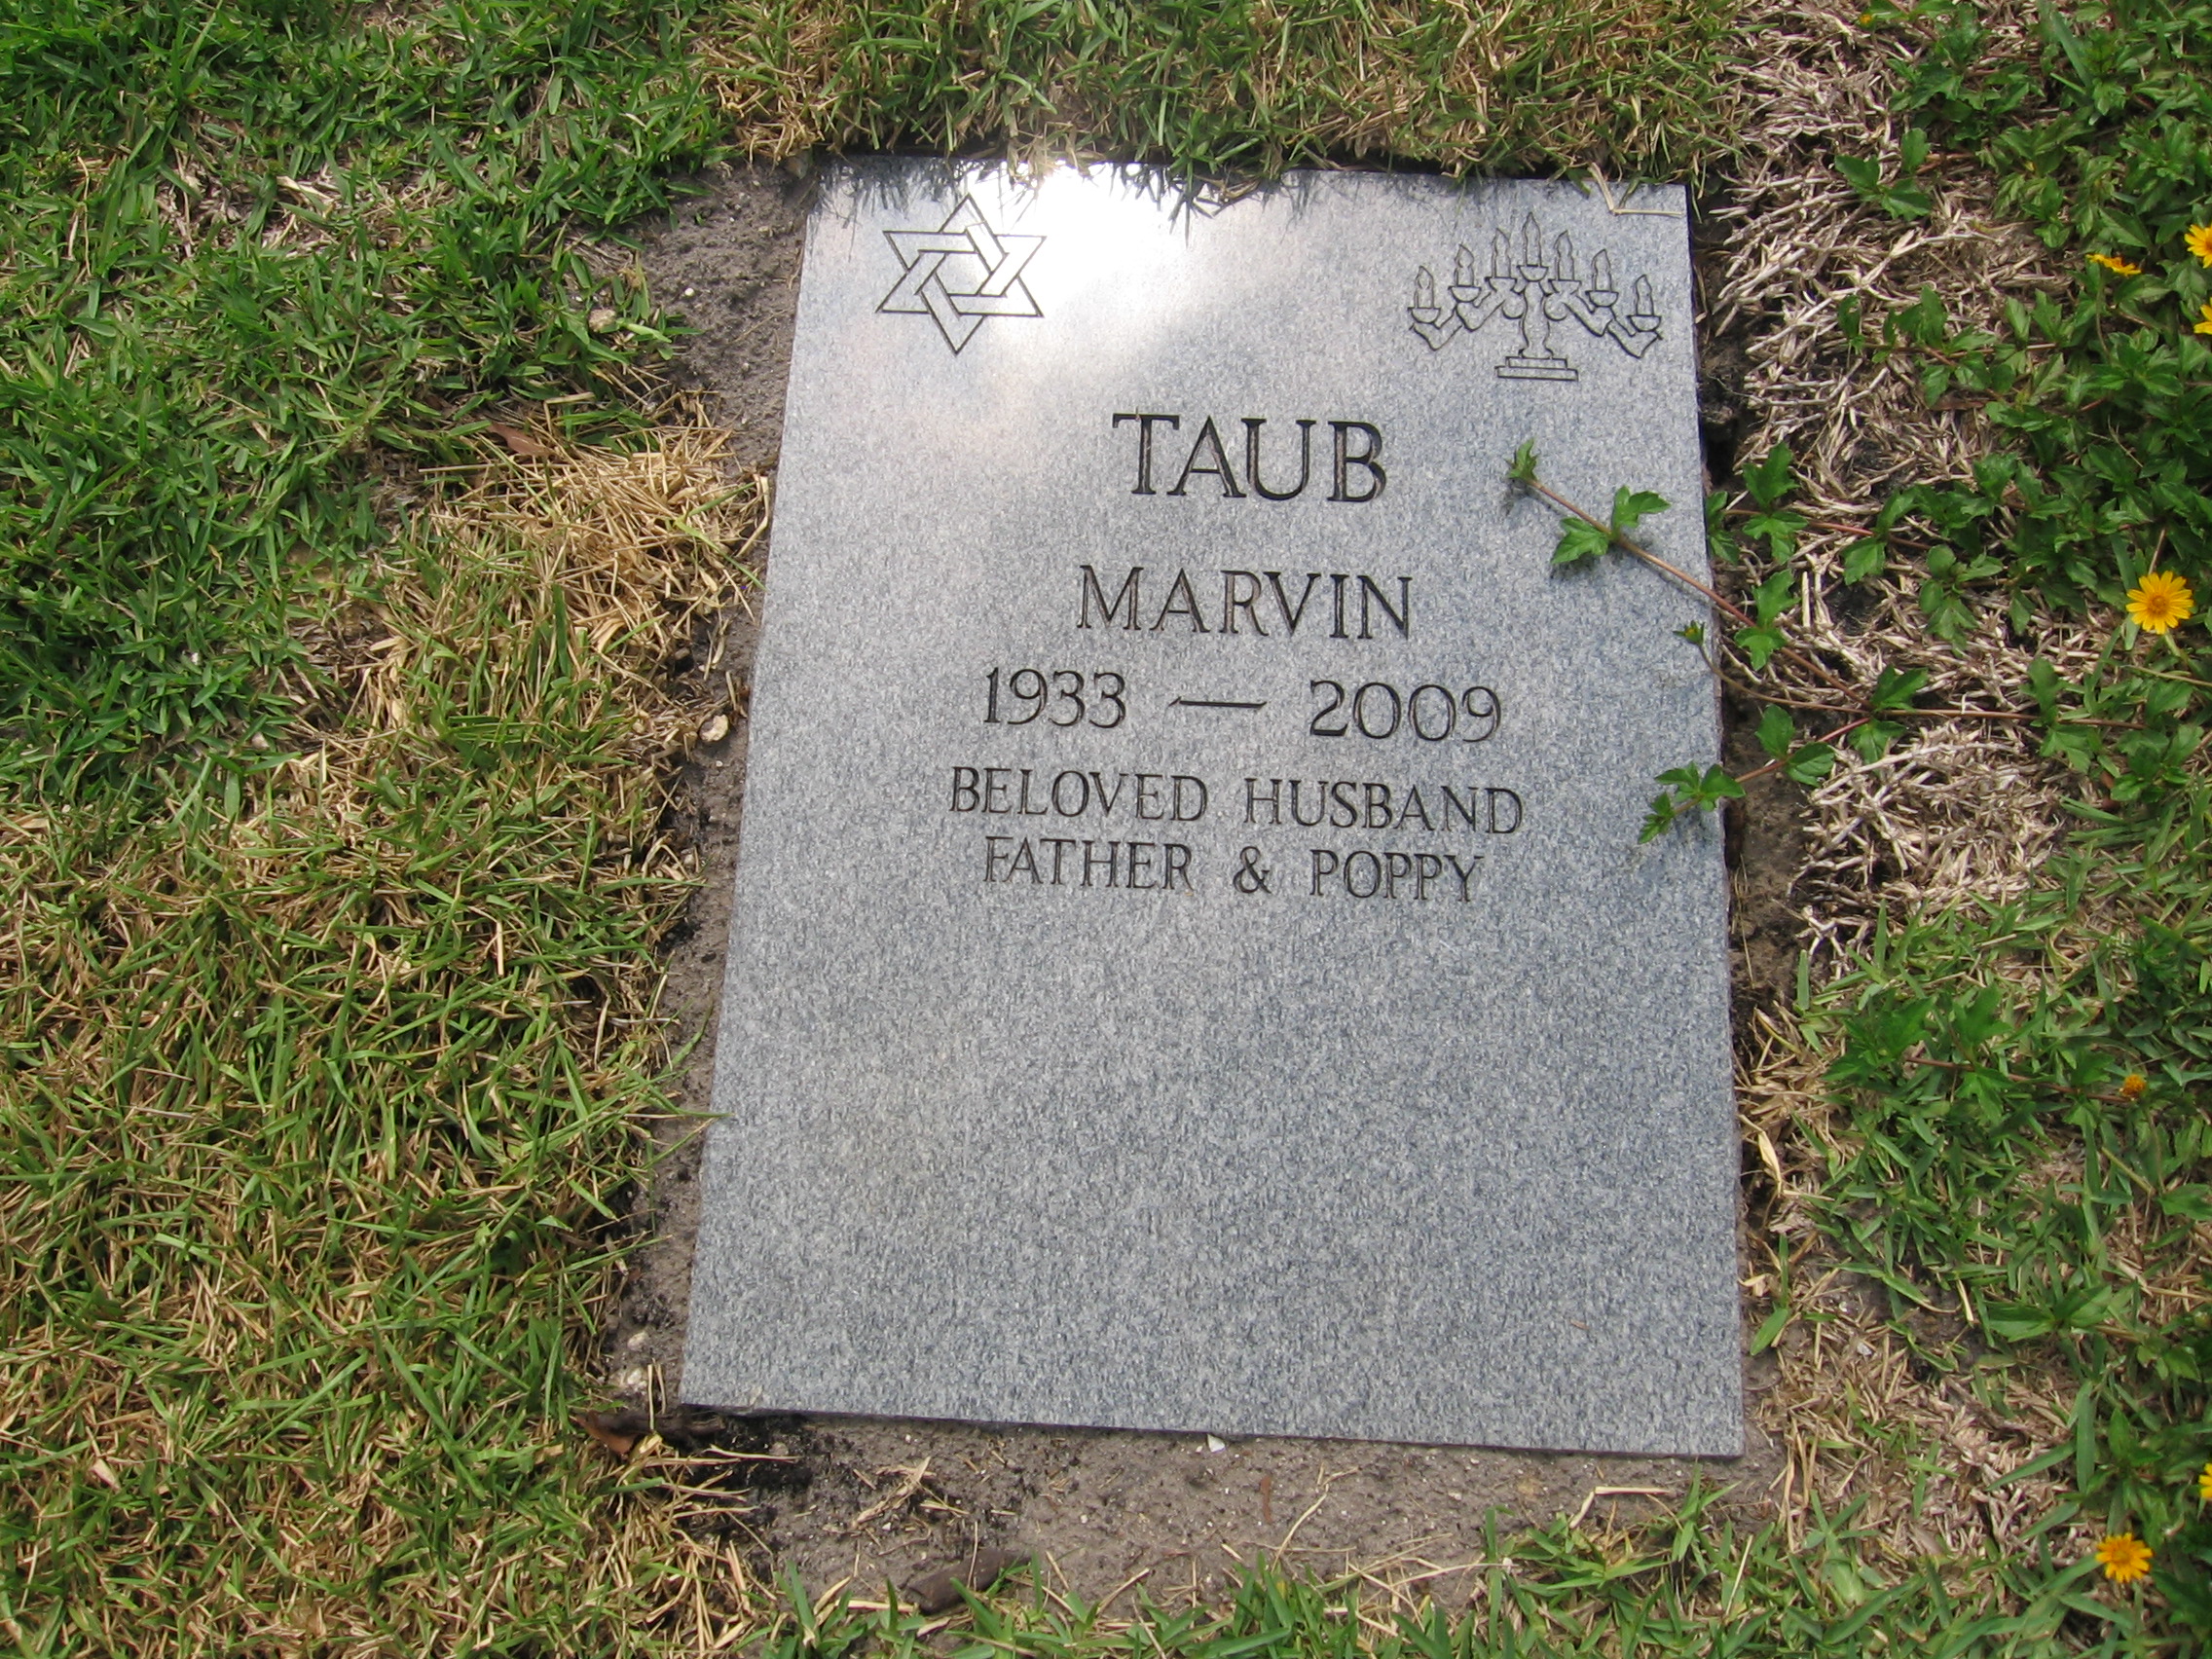 Marvin Taub